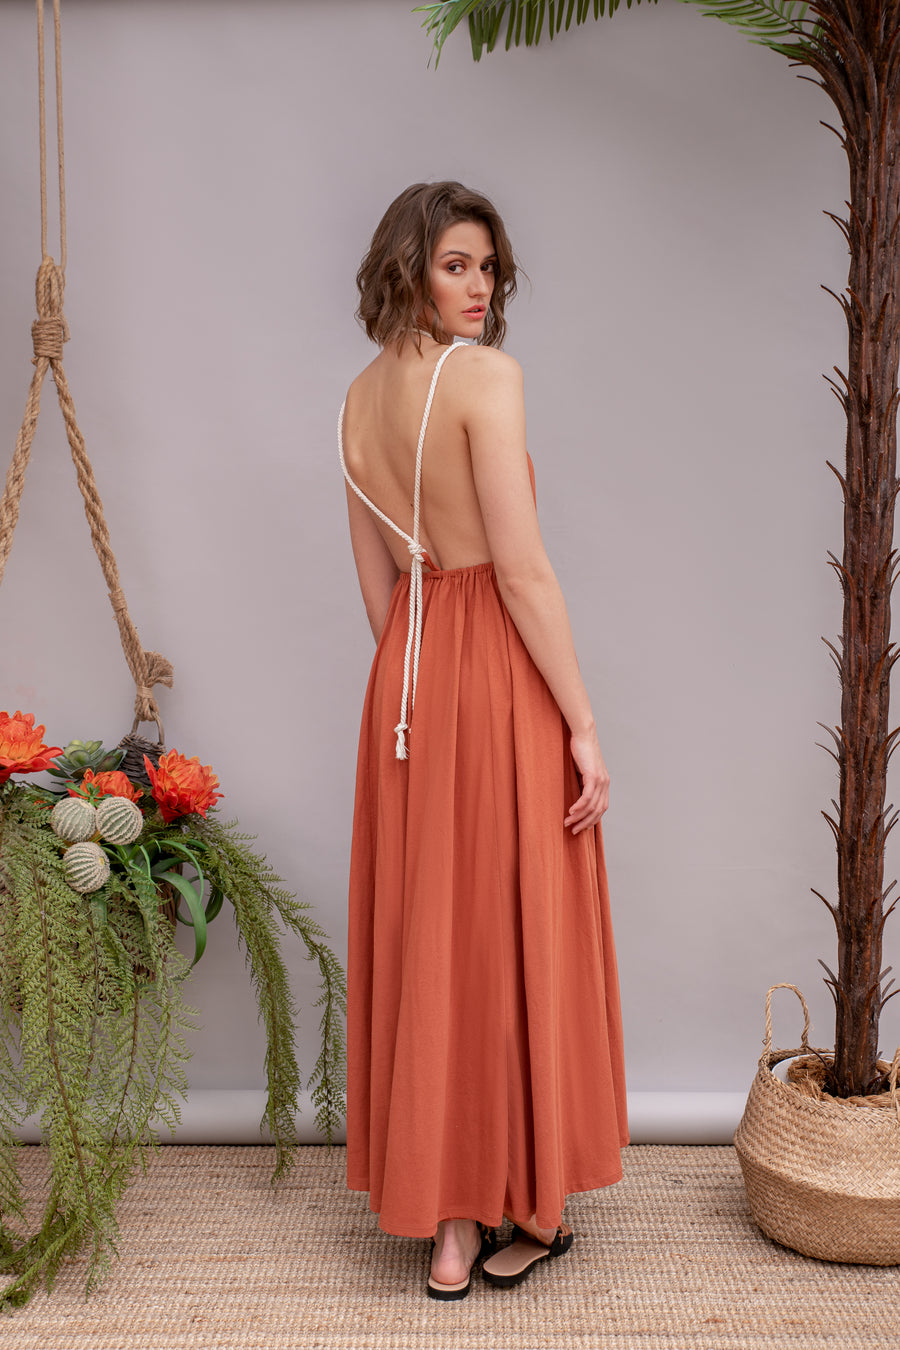 Daiquiri Terracotta Dress